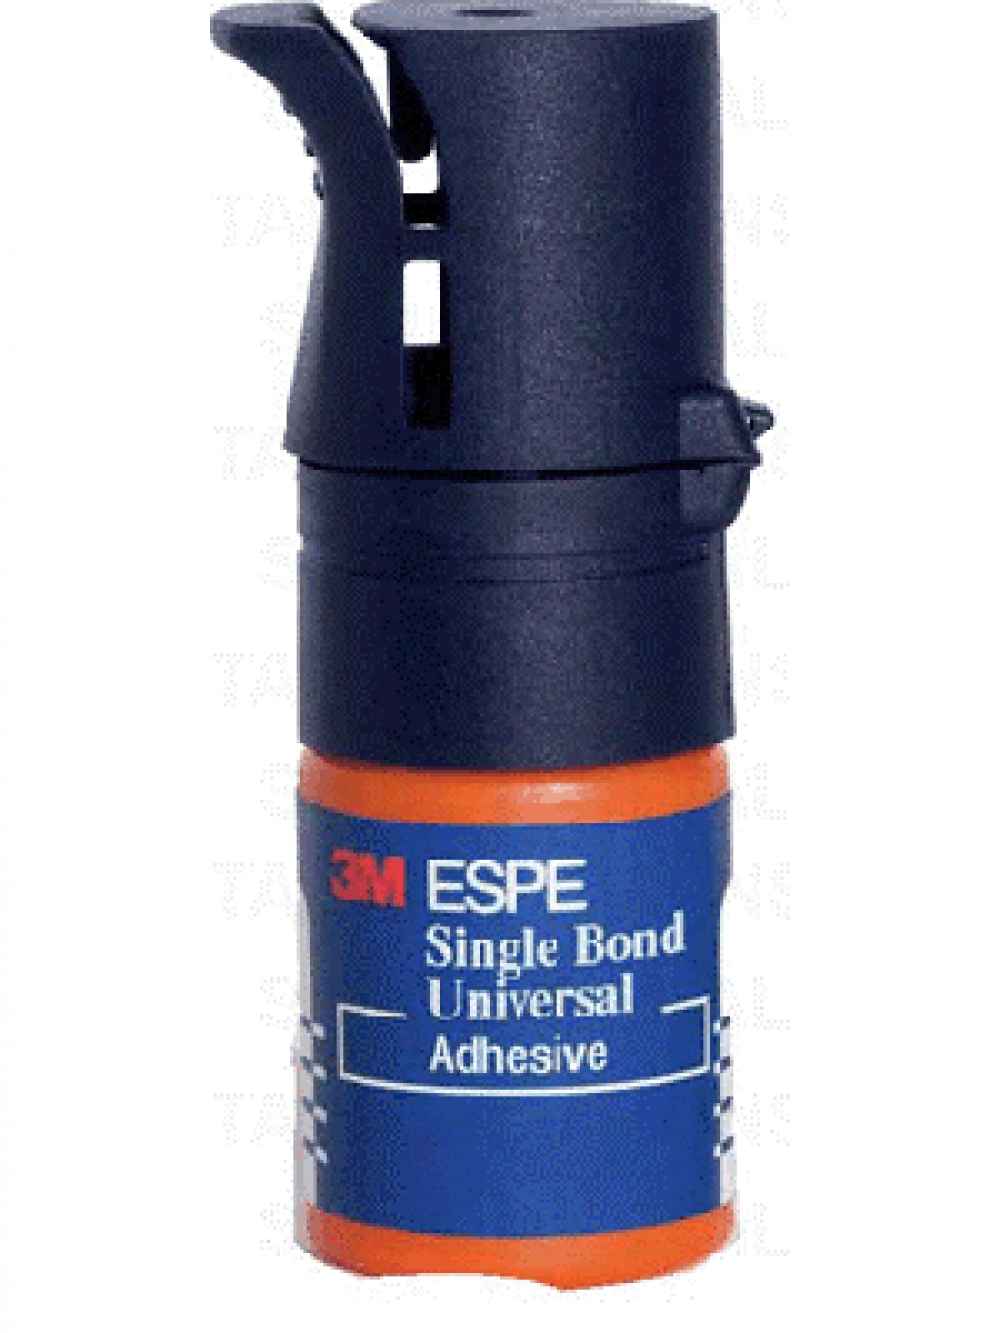 3m Espe Single Bond Universal Adhesive 5ML